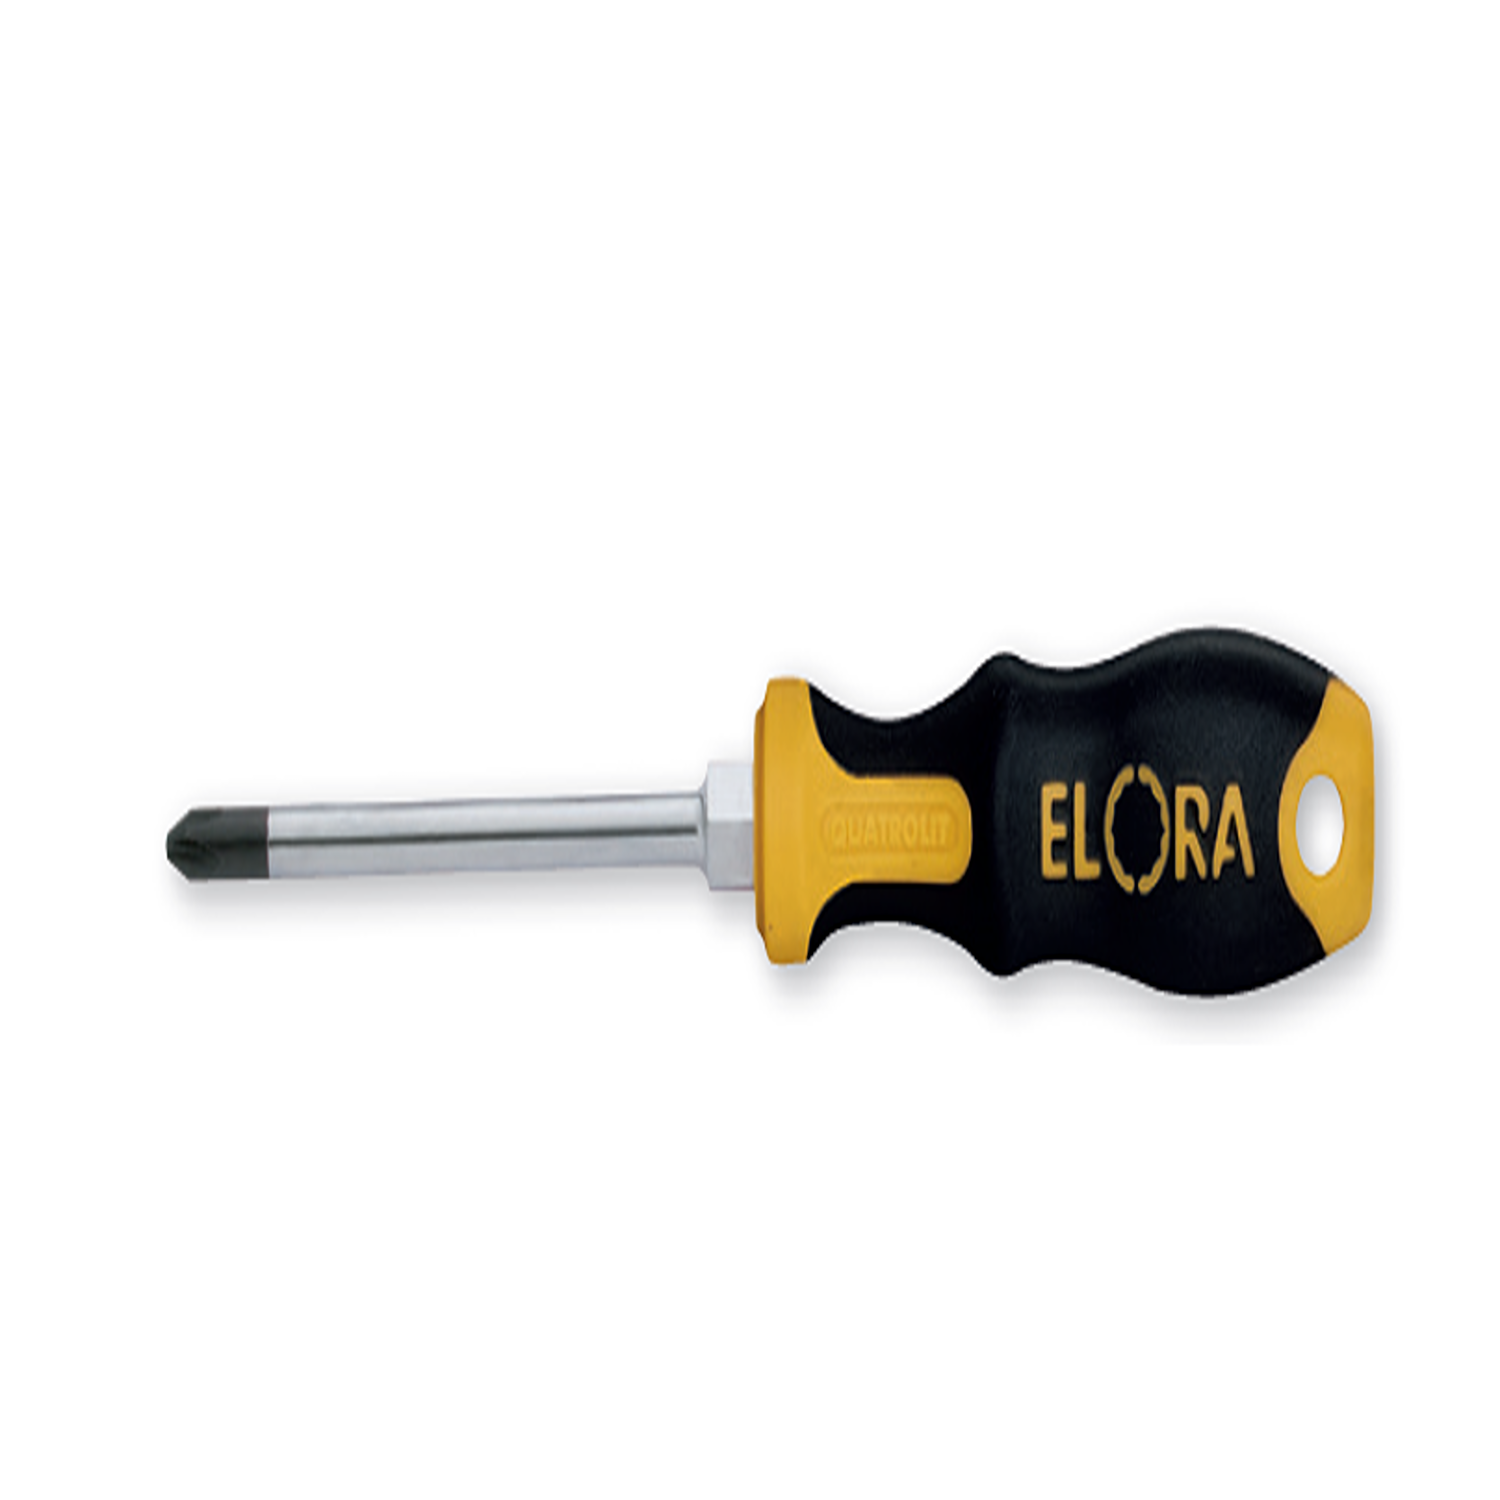 ELORA 559-PH Screwdriver for Cross Slotted Screws (ELORA Tools) - Premium Screwdriver from ELORA - Shop now at Yew Aik.